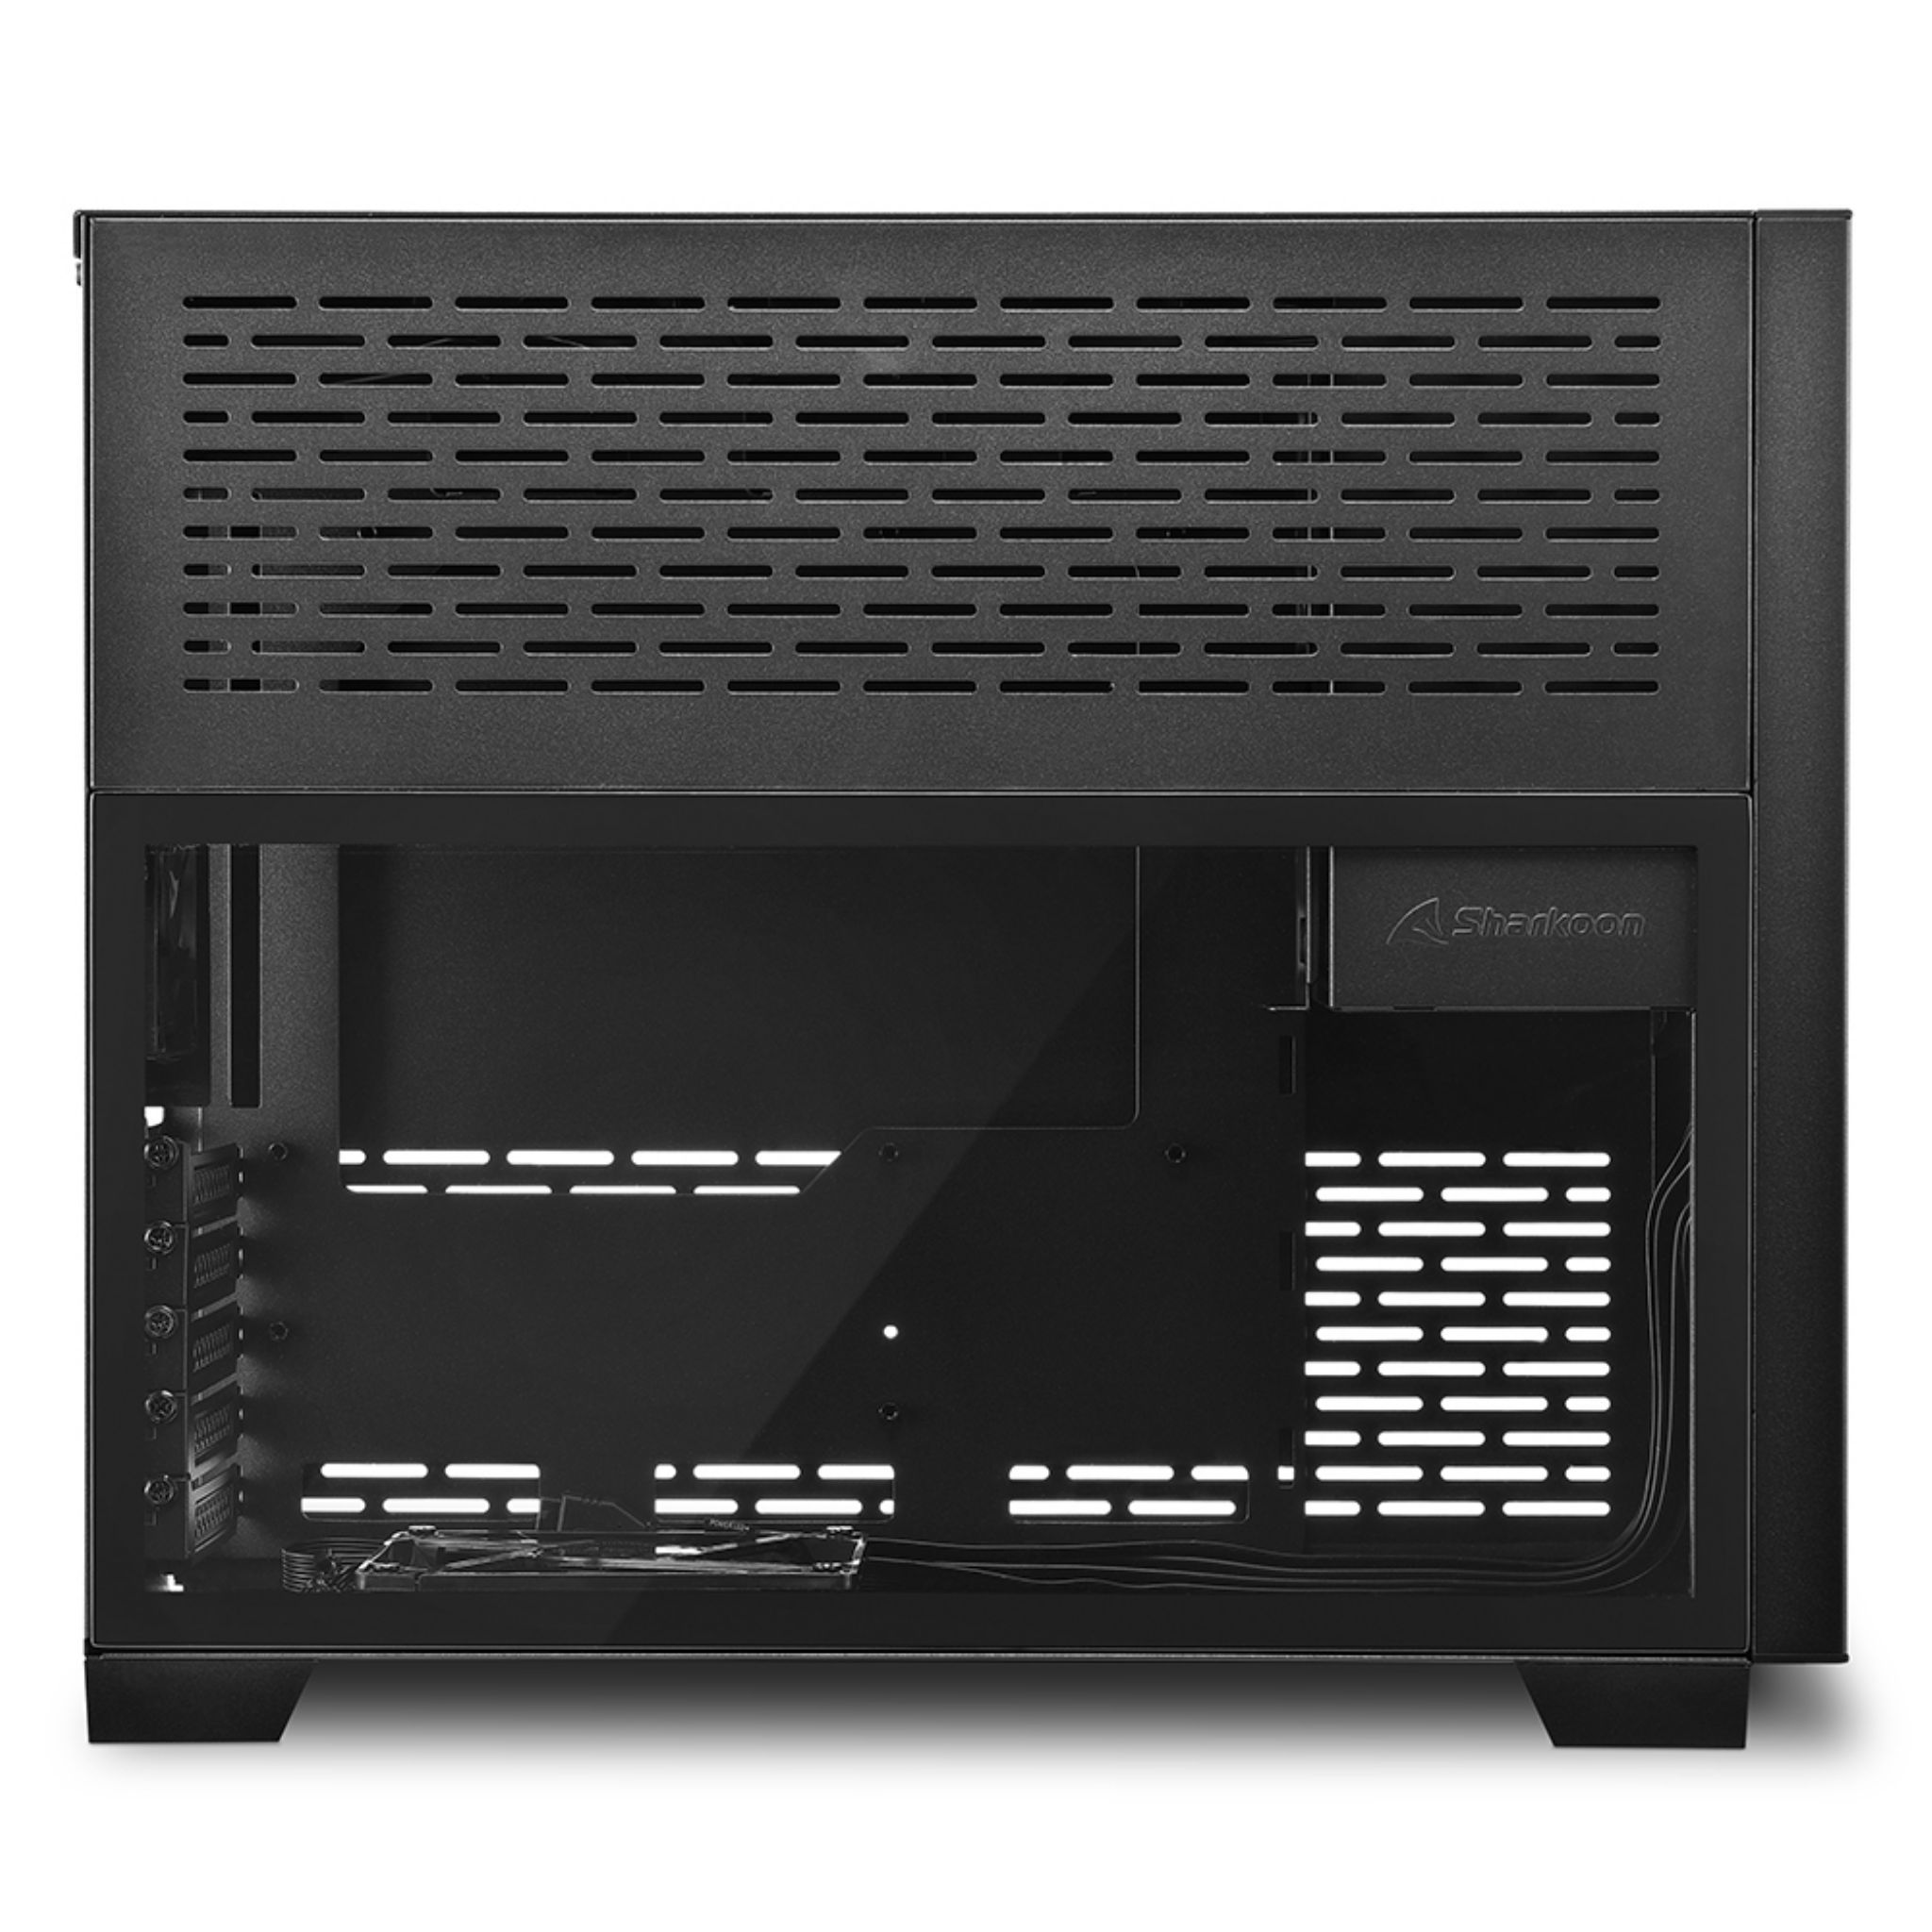 Gehäuse, SHARKOON MS-Y1000 schwarz PC